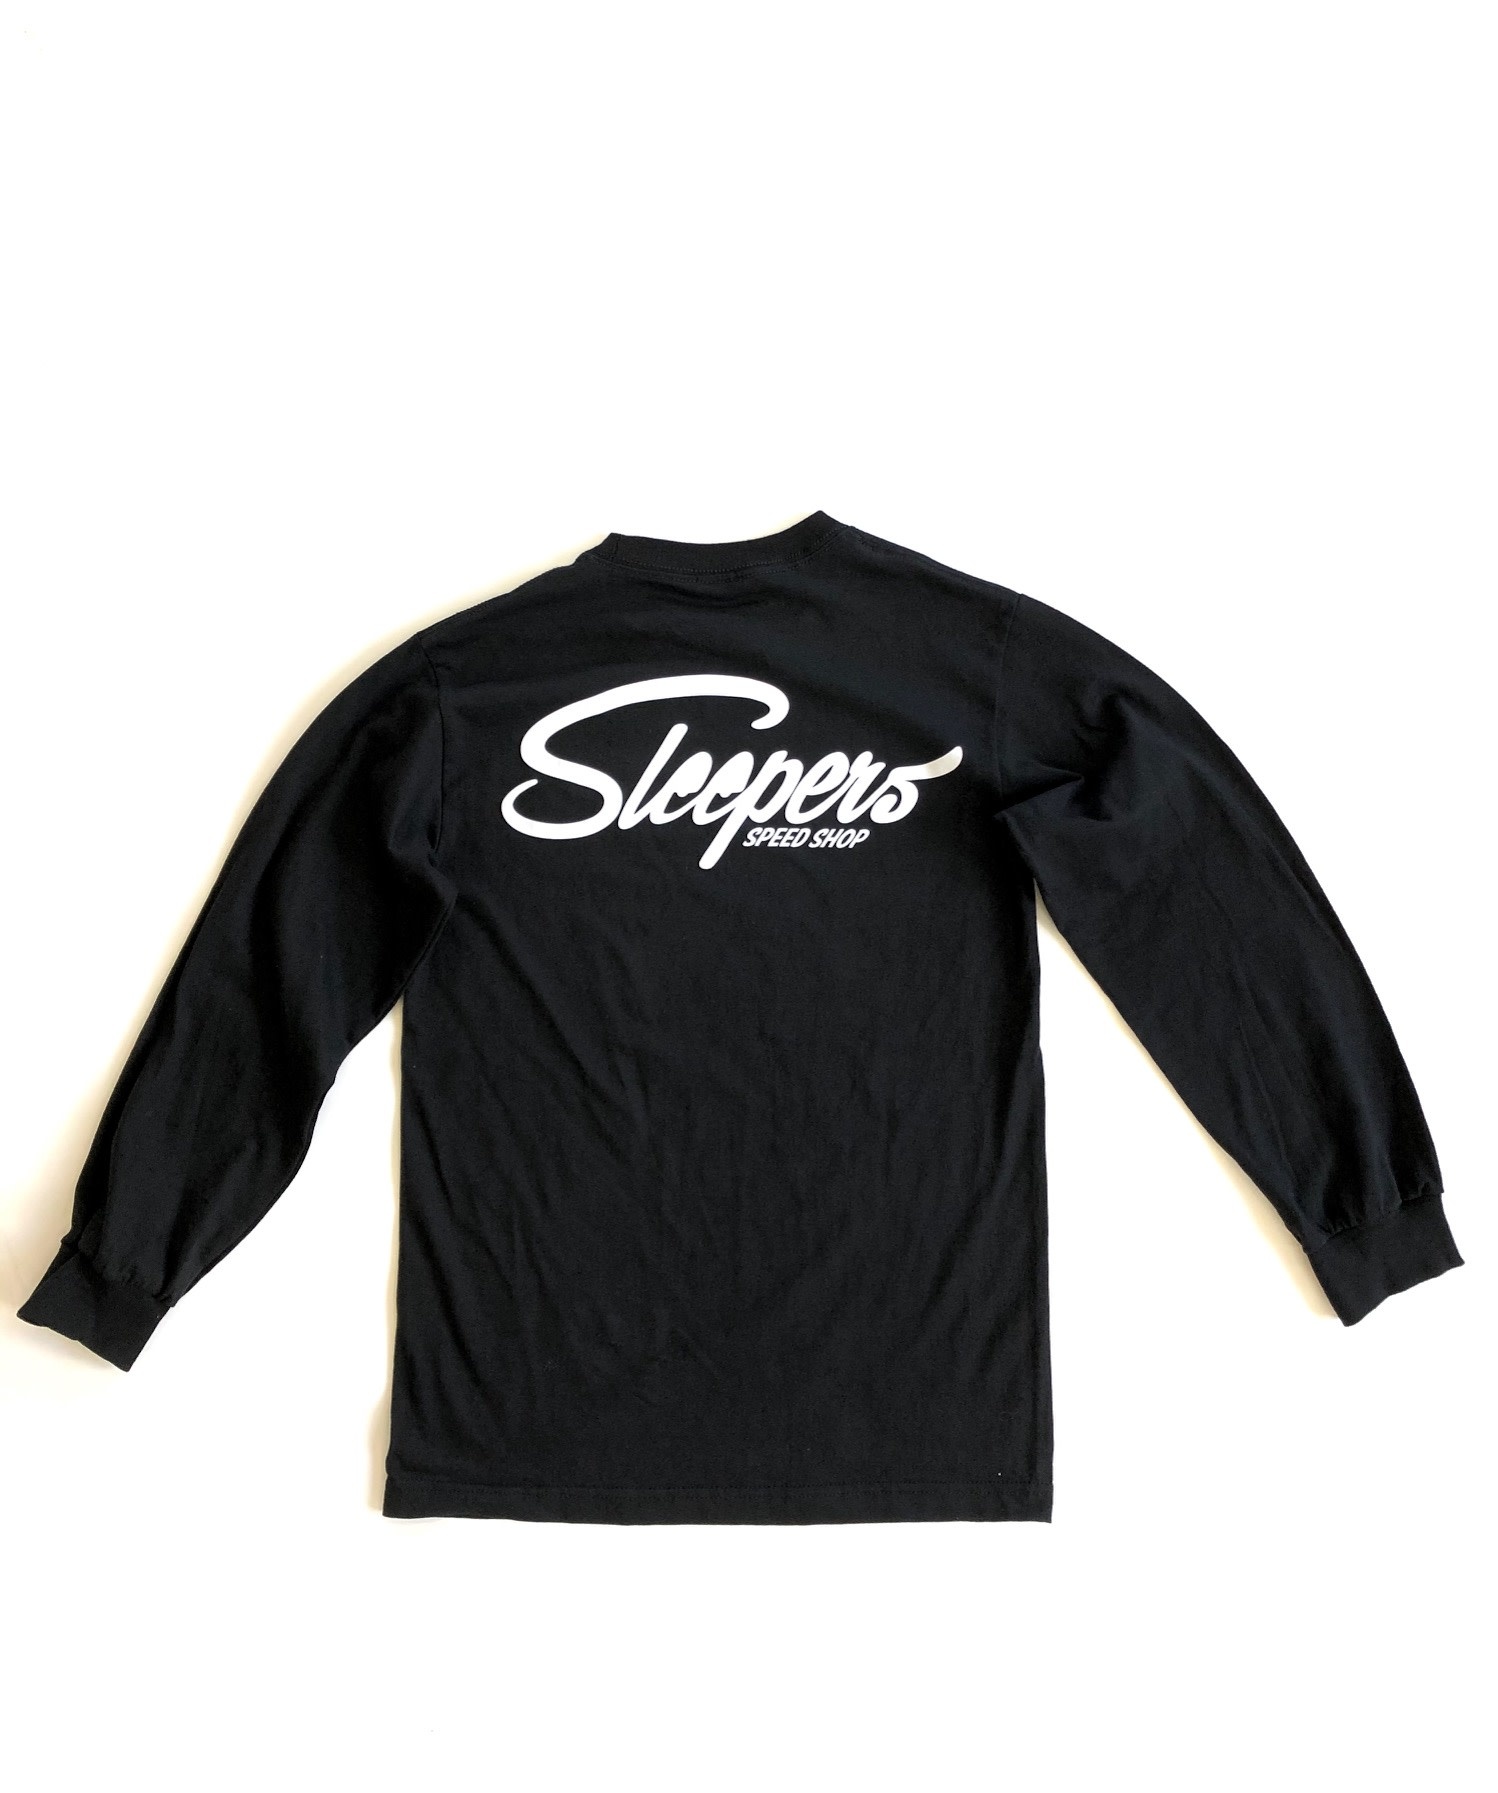 Sleepers Speed Shop Long Sleeve T- Shirt